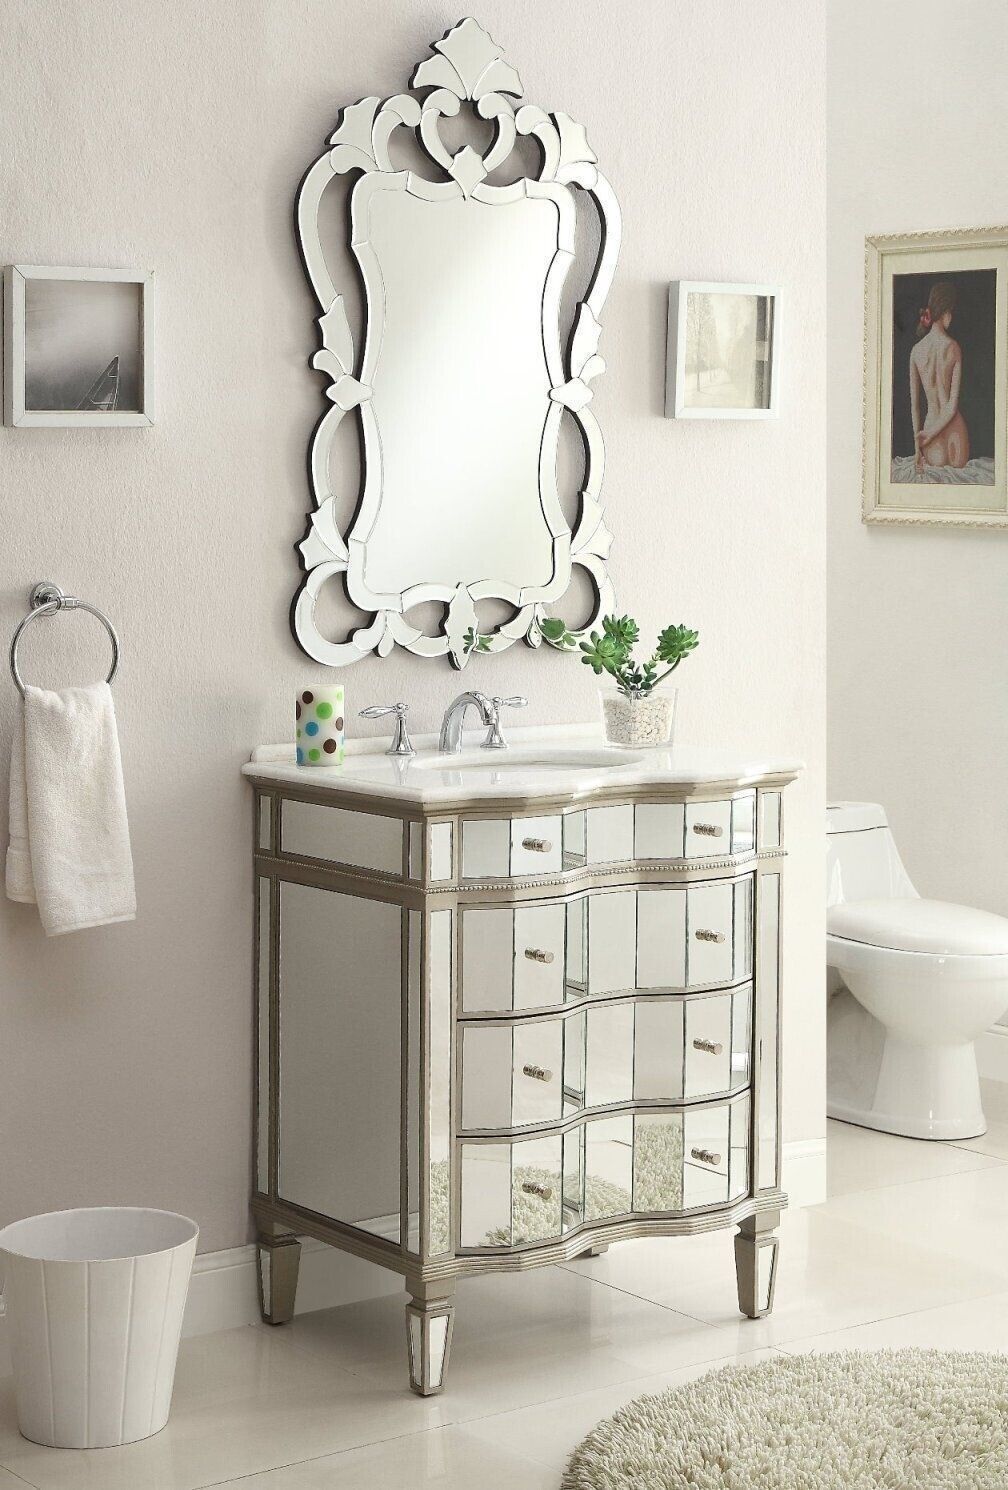 Benton Collection Asselin Bathroom Sink Vanity with Mirror Set K